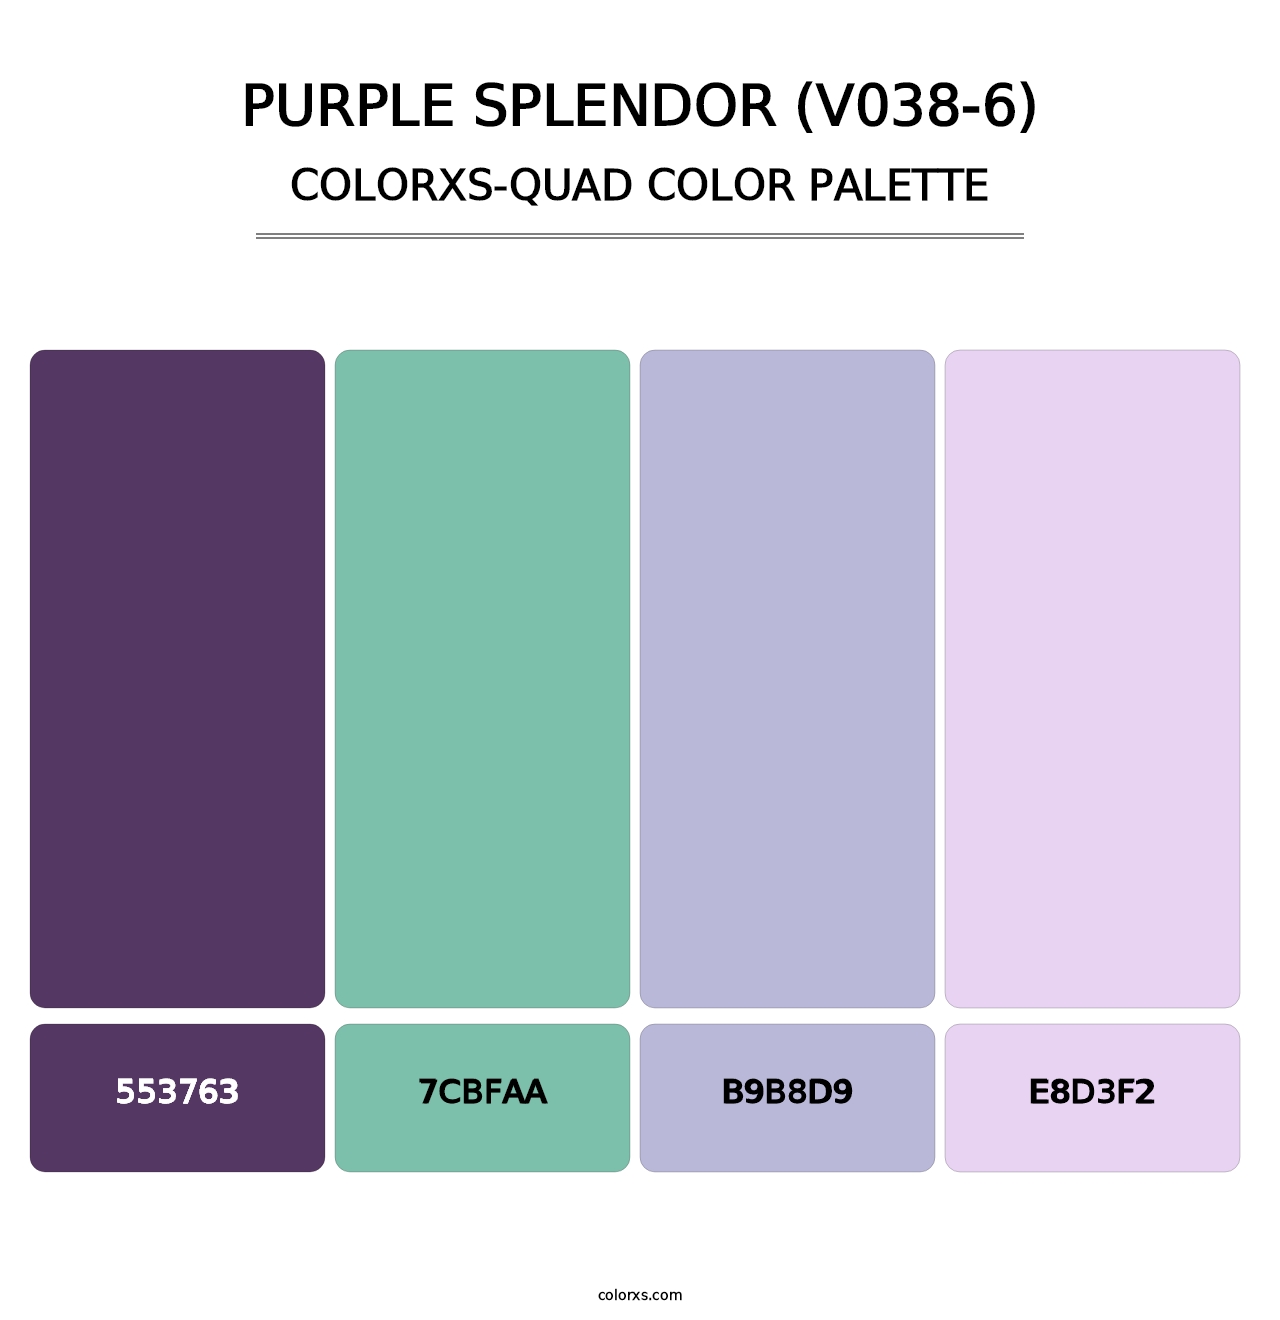 Purple Splendor (V038-6) - Colorxs Quad Palette